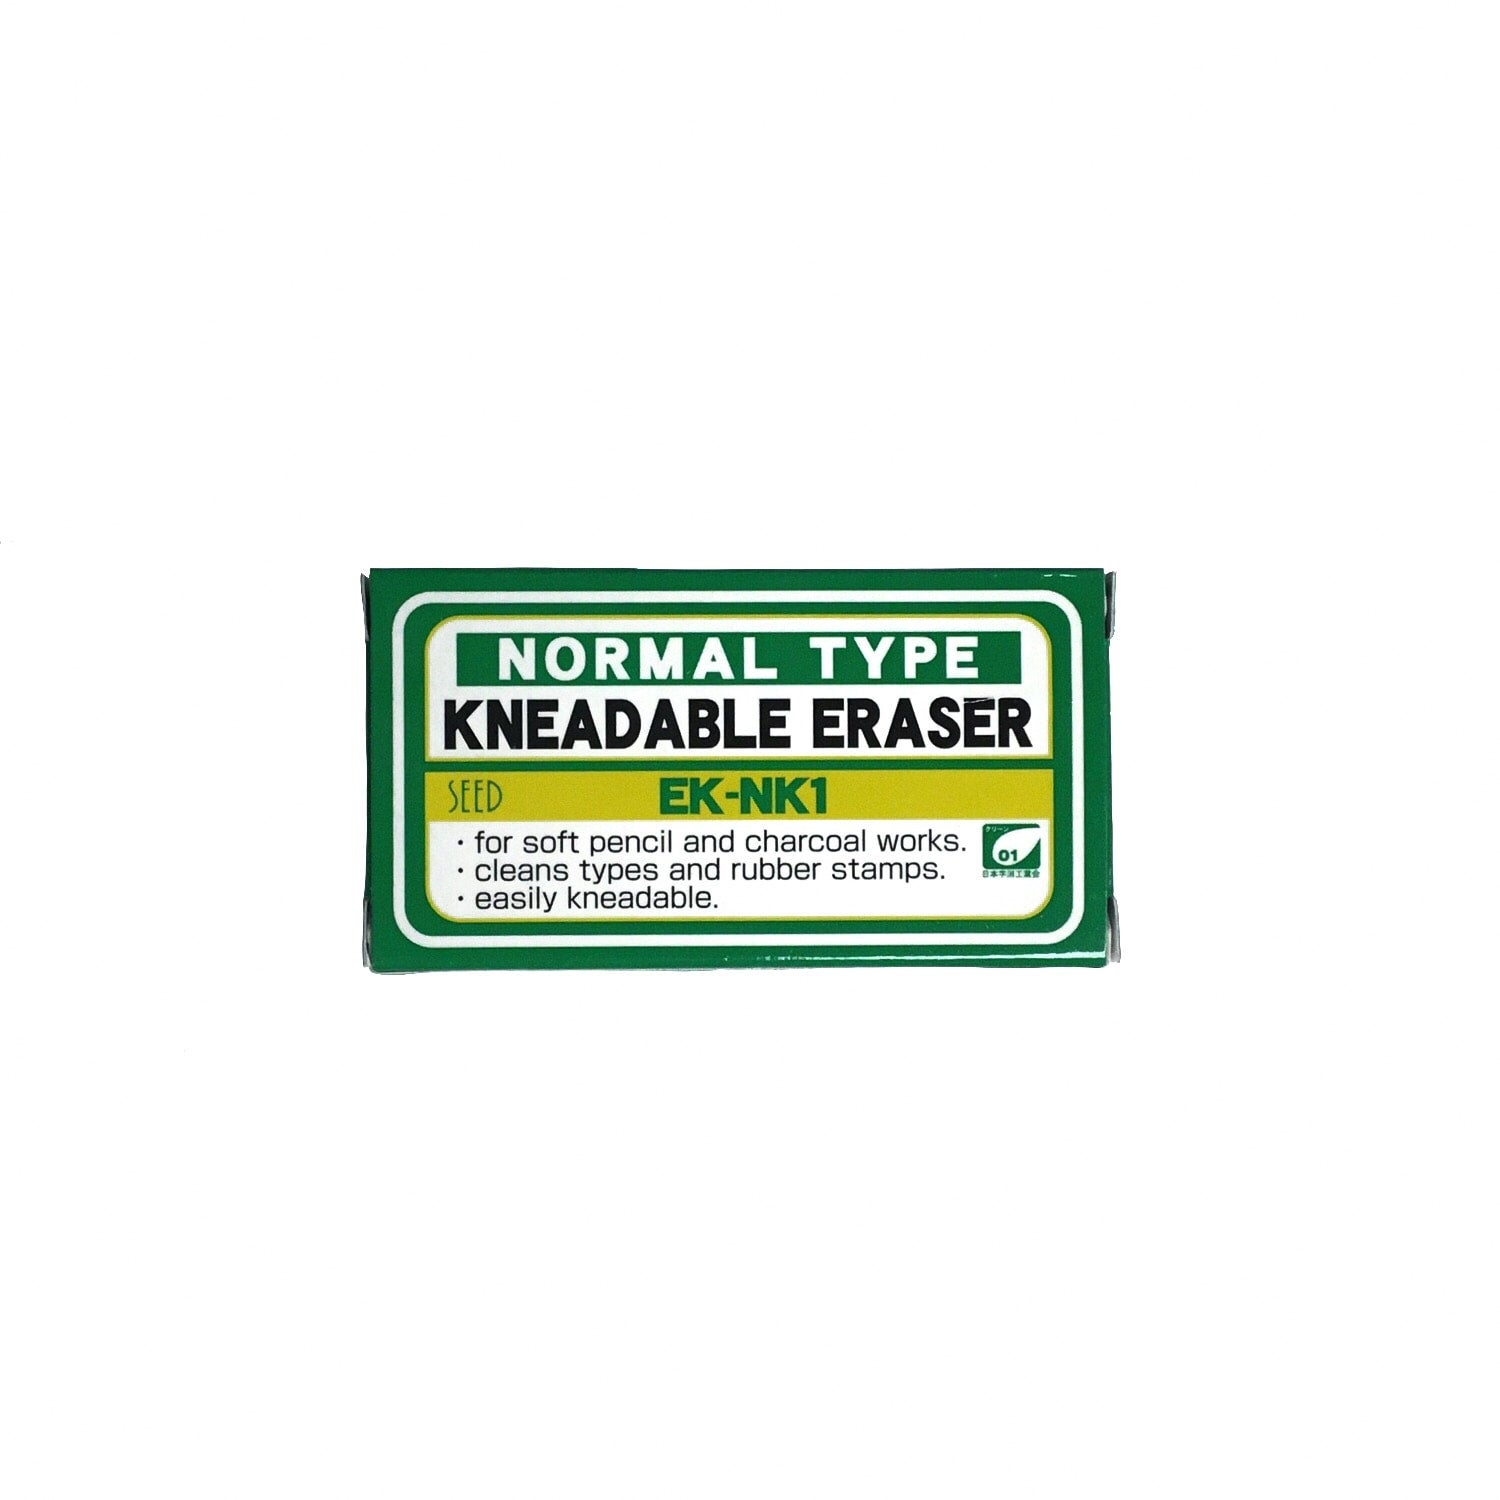 SEED Kneadable Eraser